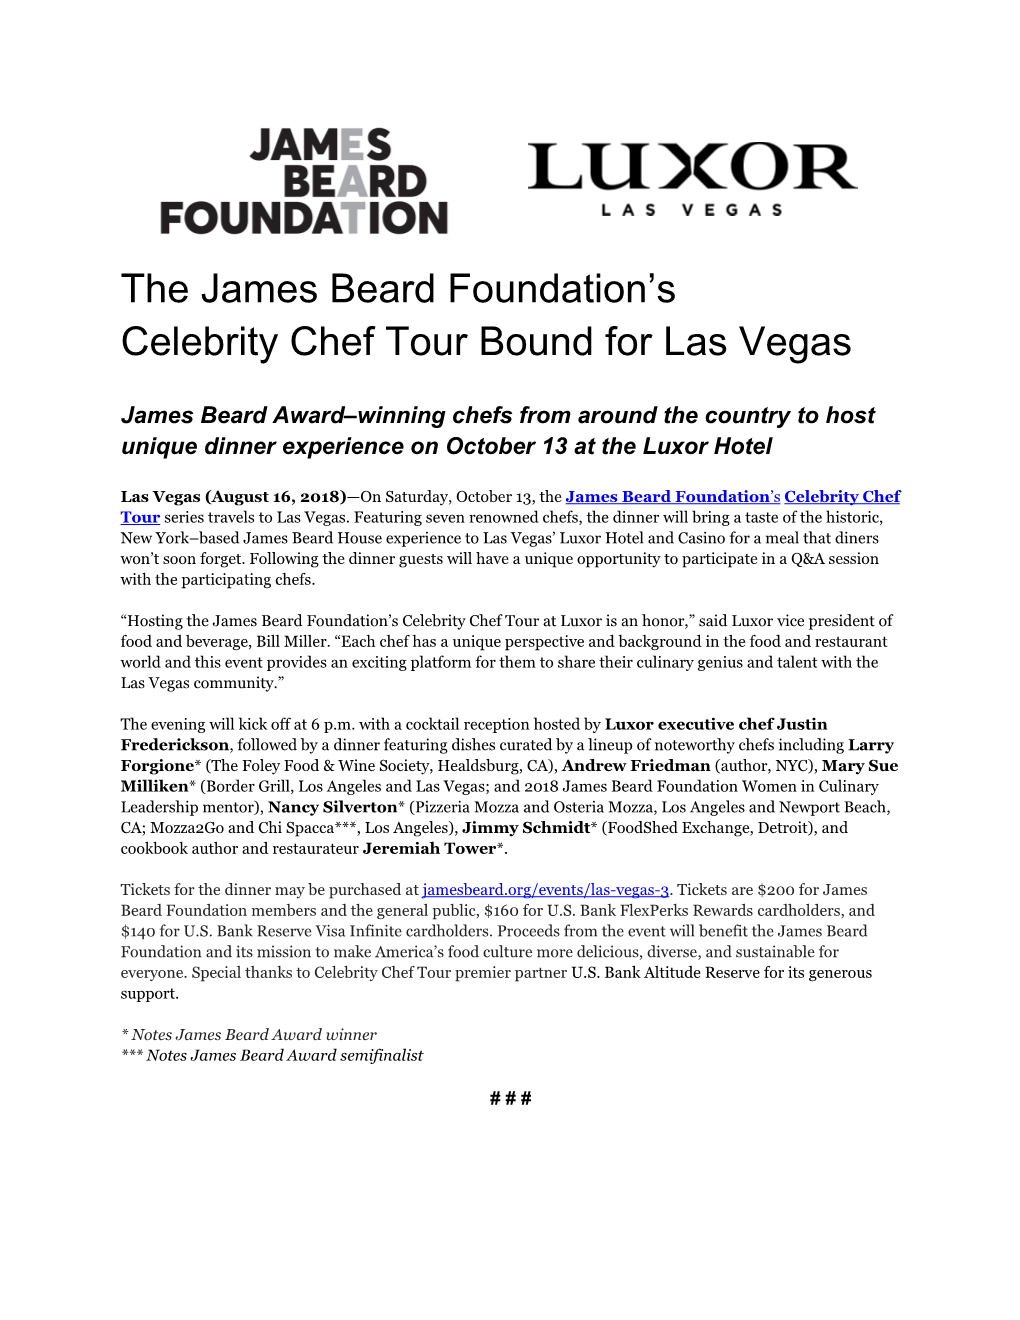 The James Beard Foundation's Celebrity Chef Tour Bound for Las Vegas